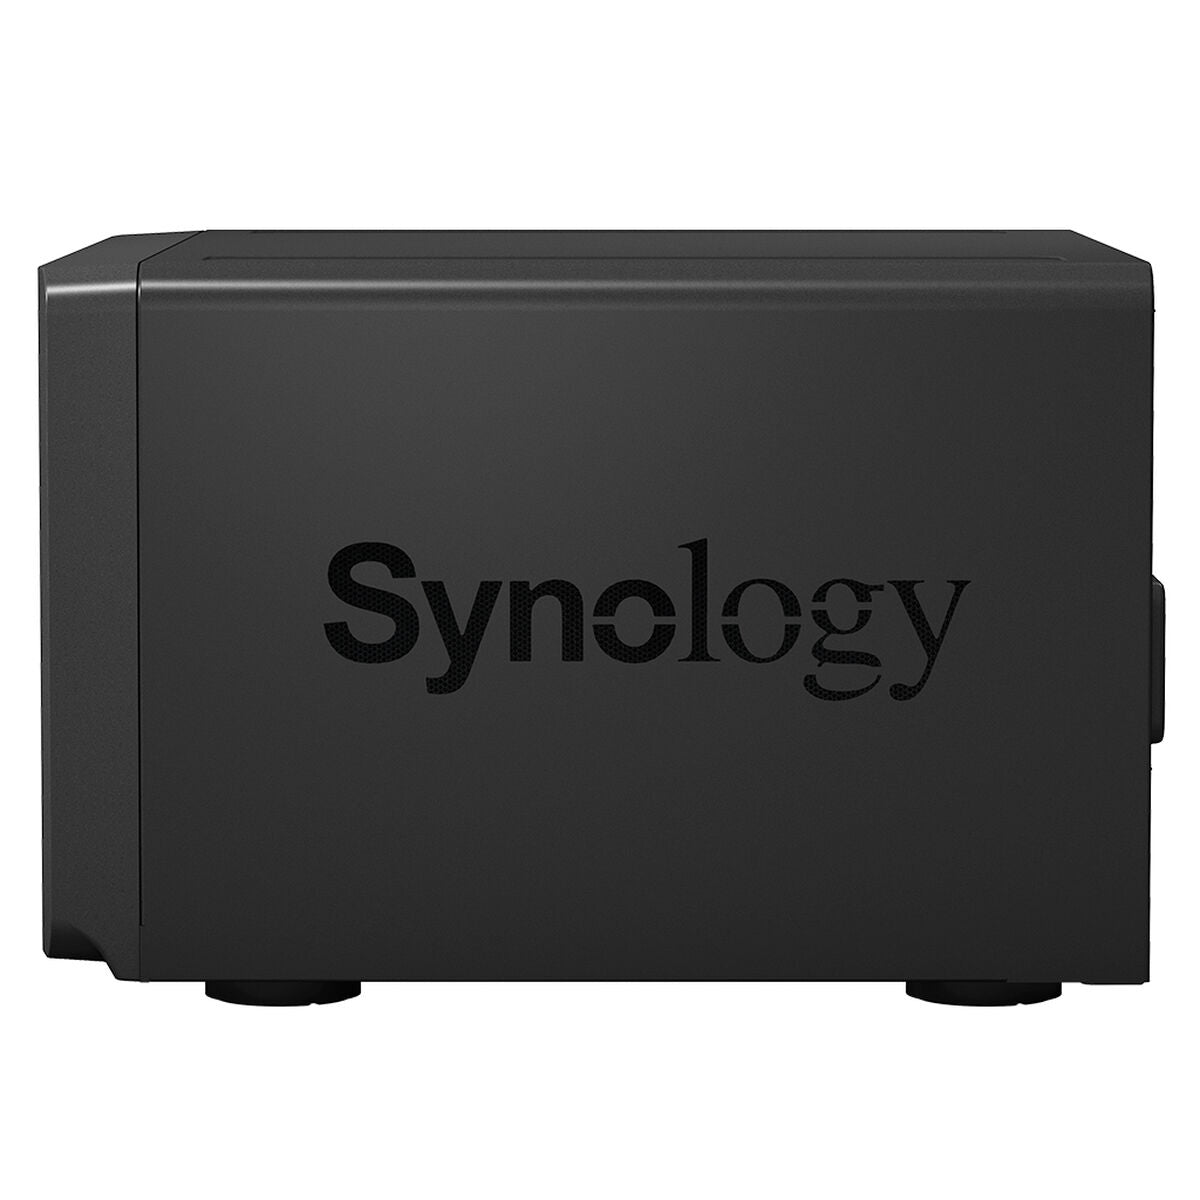 NAS Network Storage Synology DX517 Black